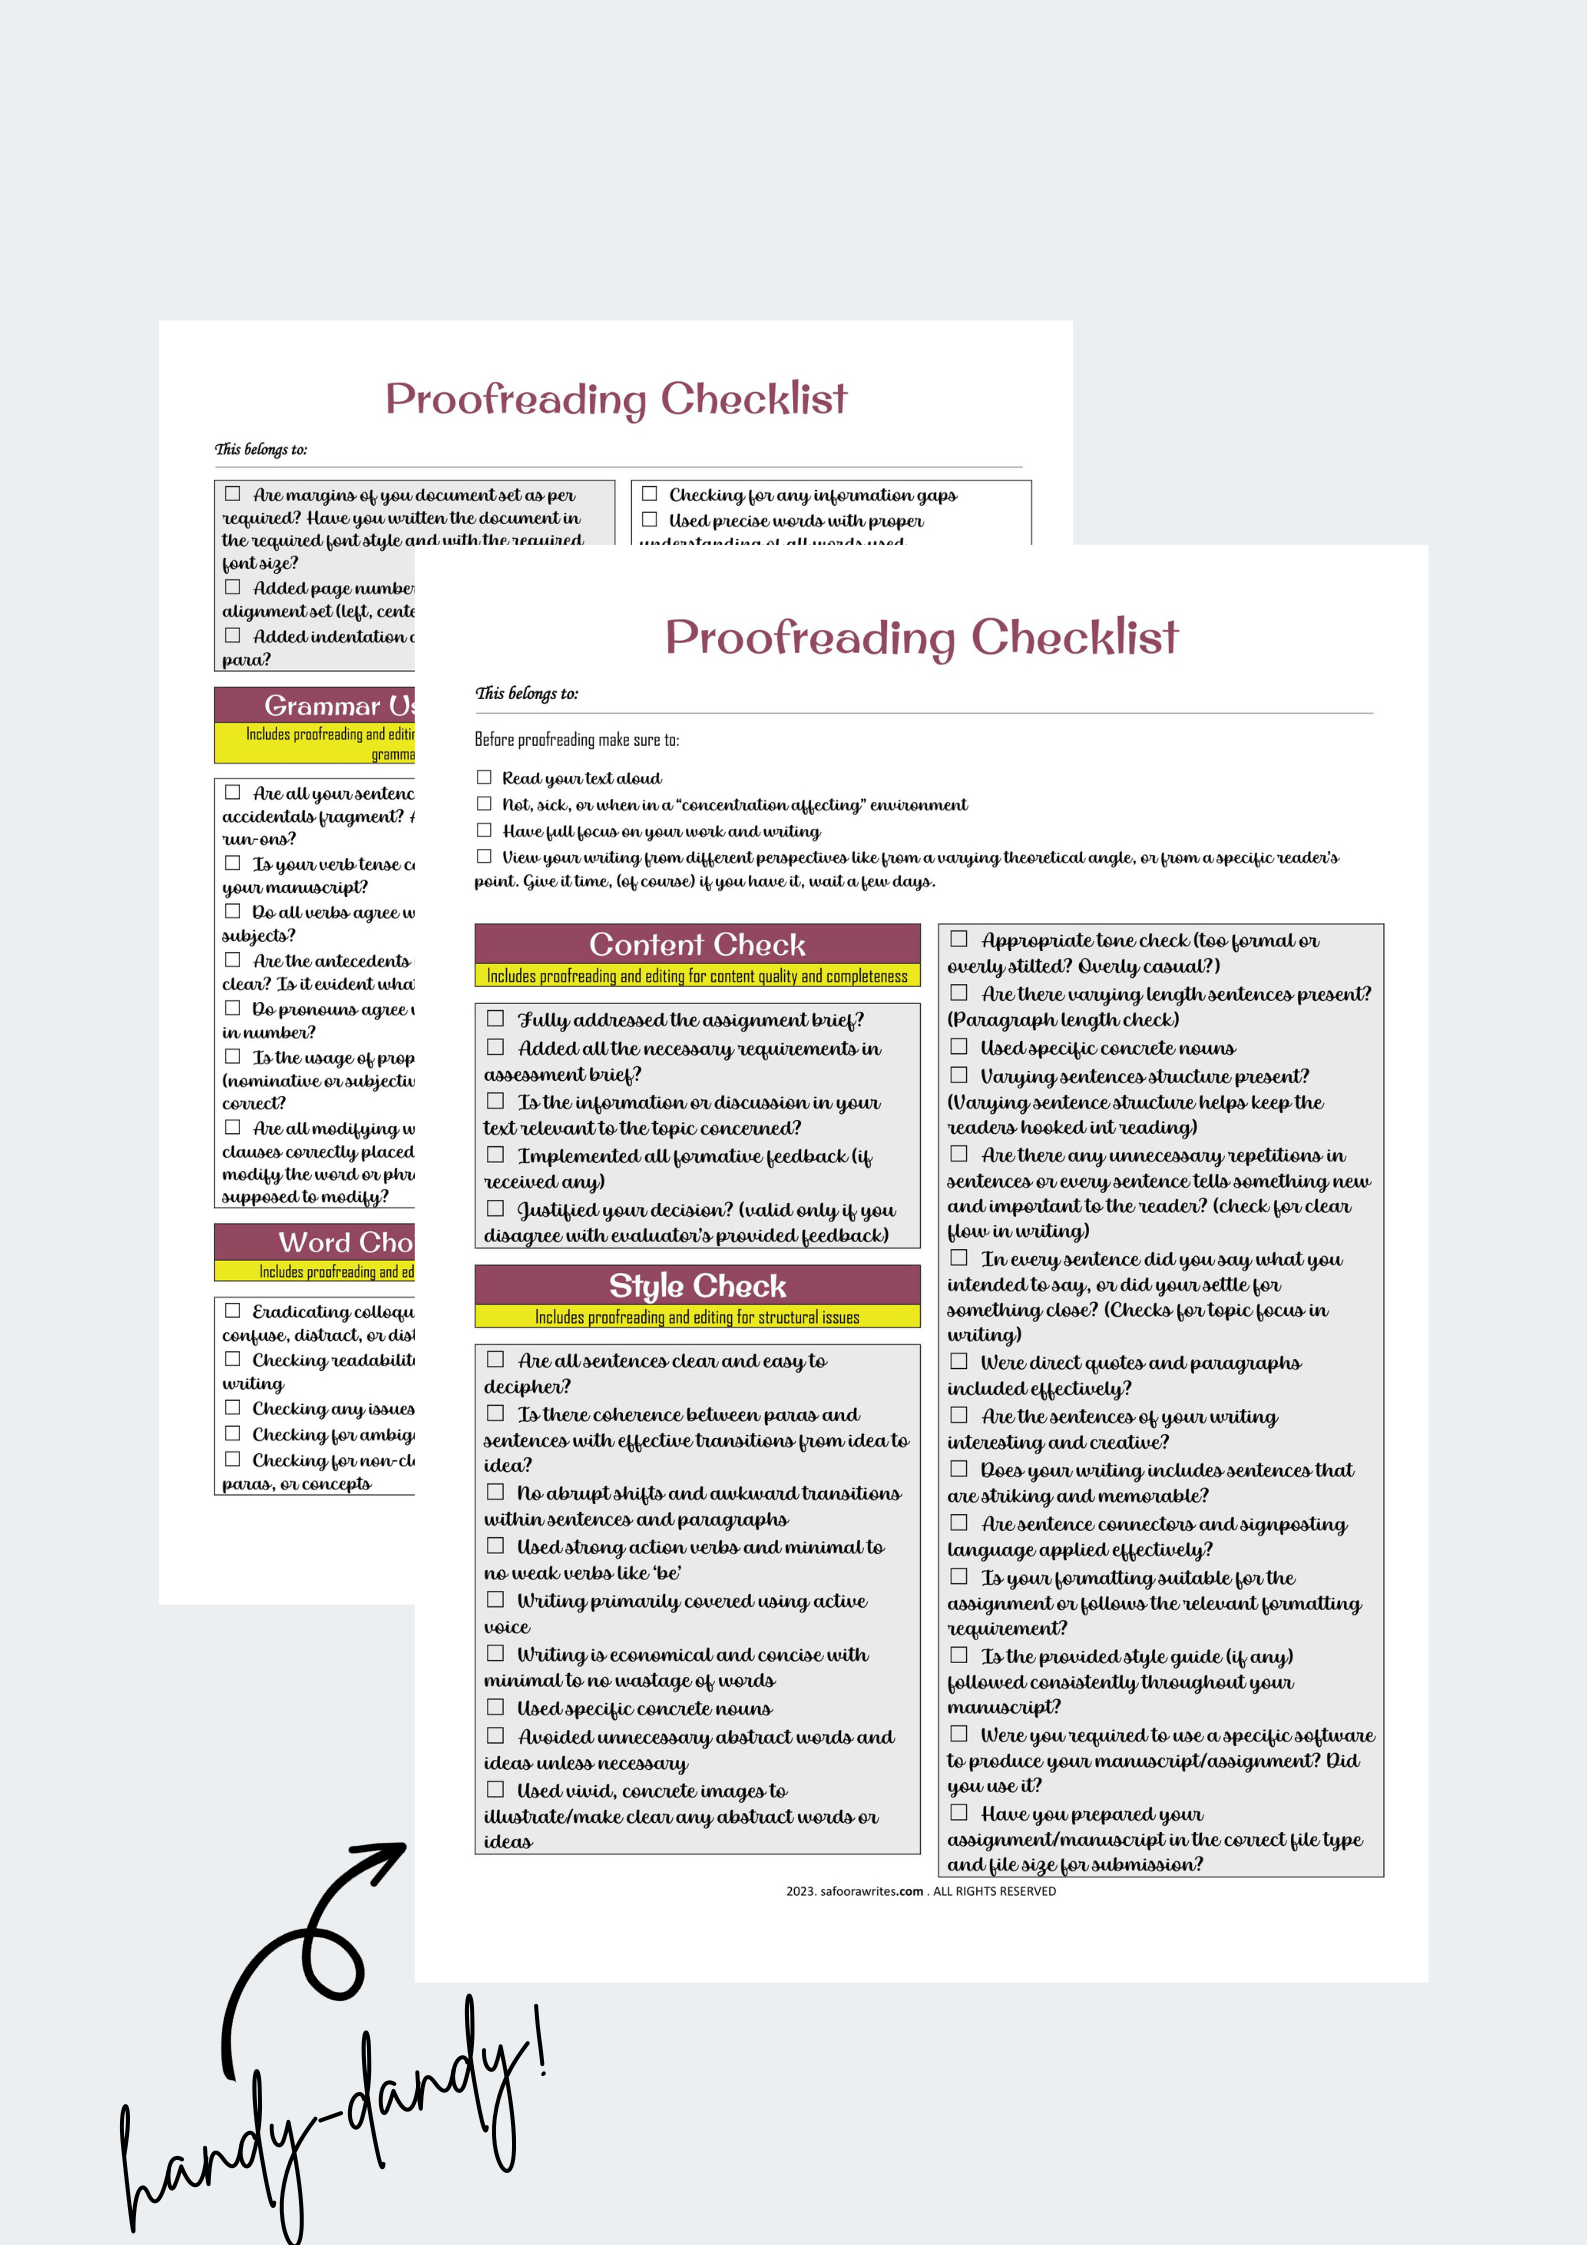 Proofreading_Checklist _Image